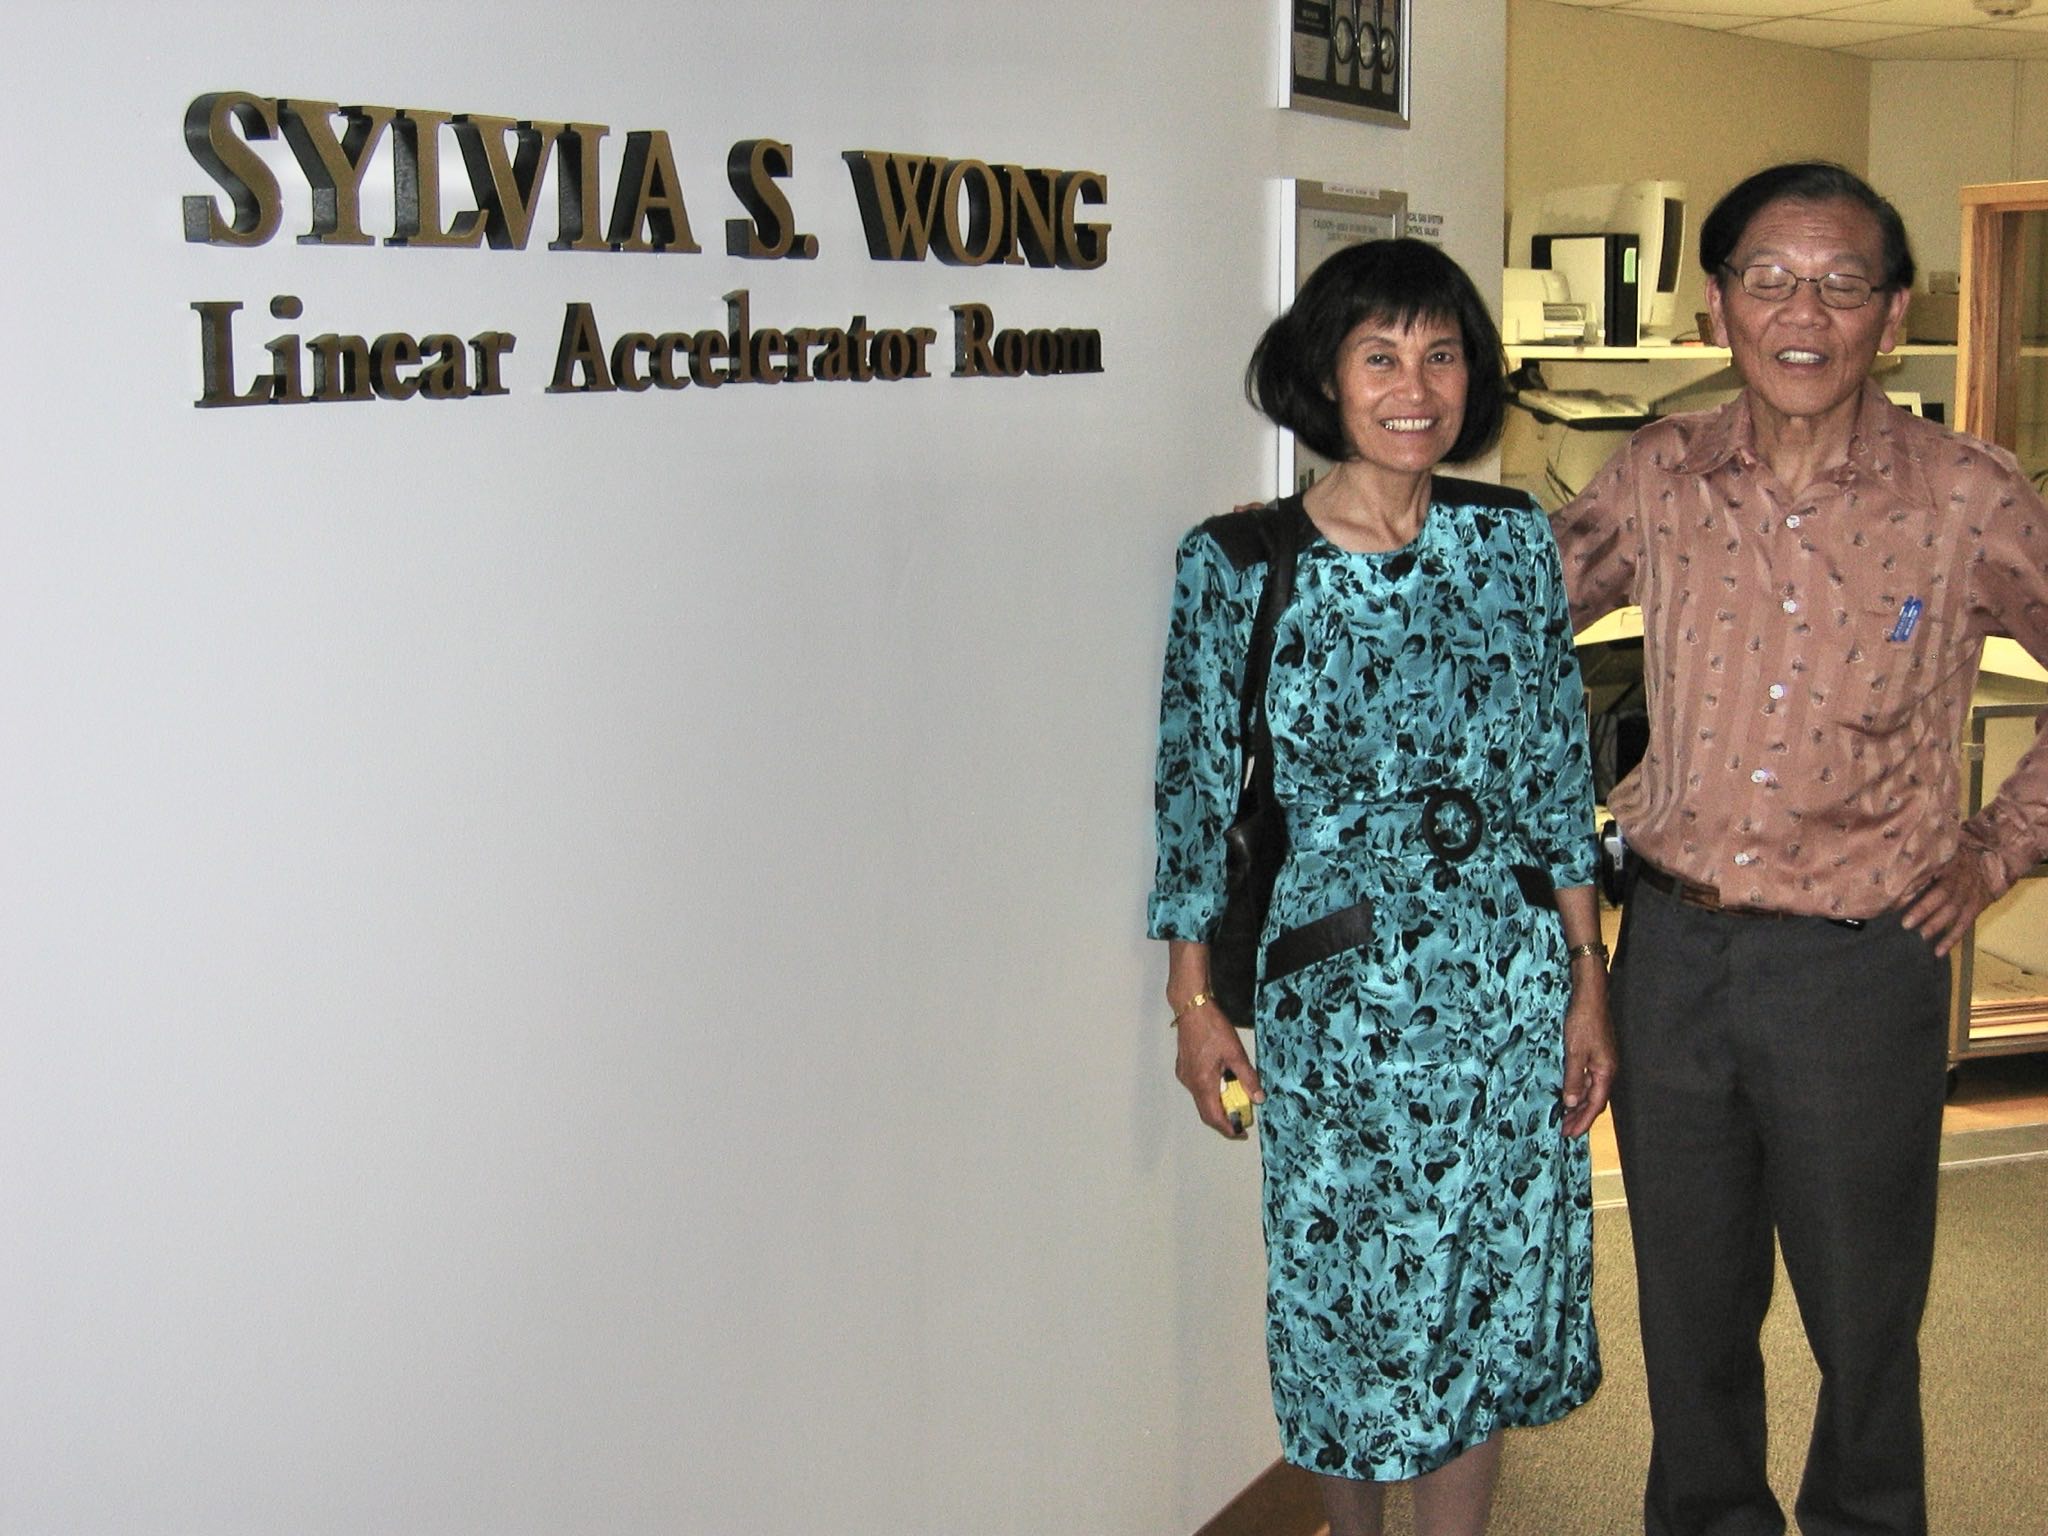 St. Joseph’s Medical Center Names Linear Accelerator Room After Sylvia Wong